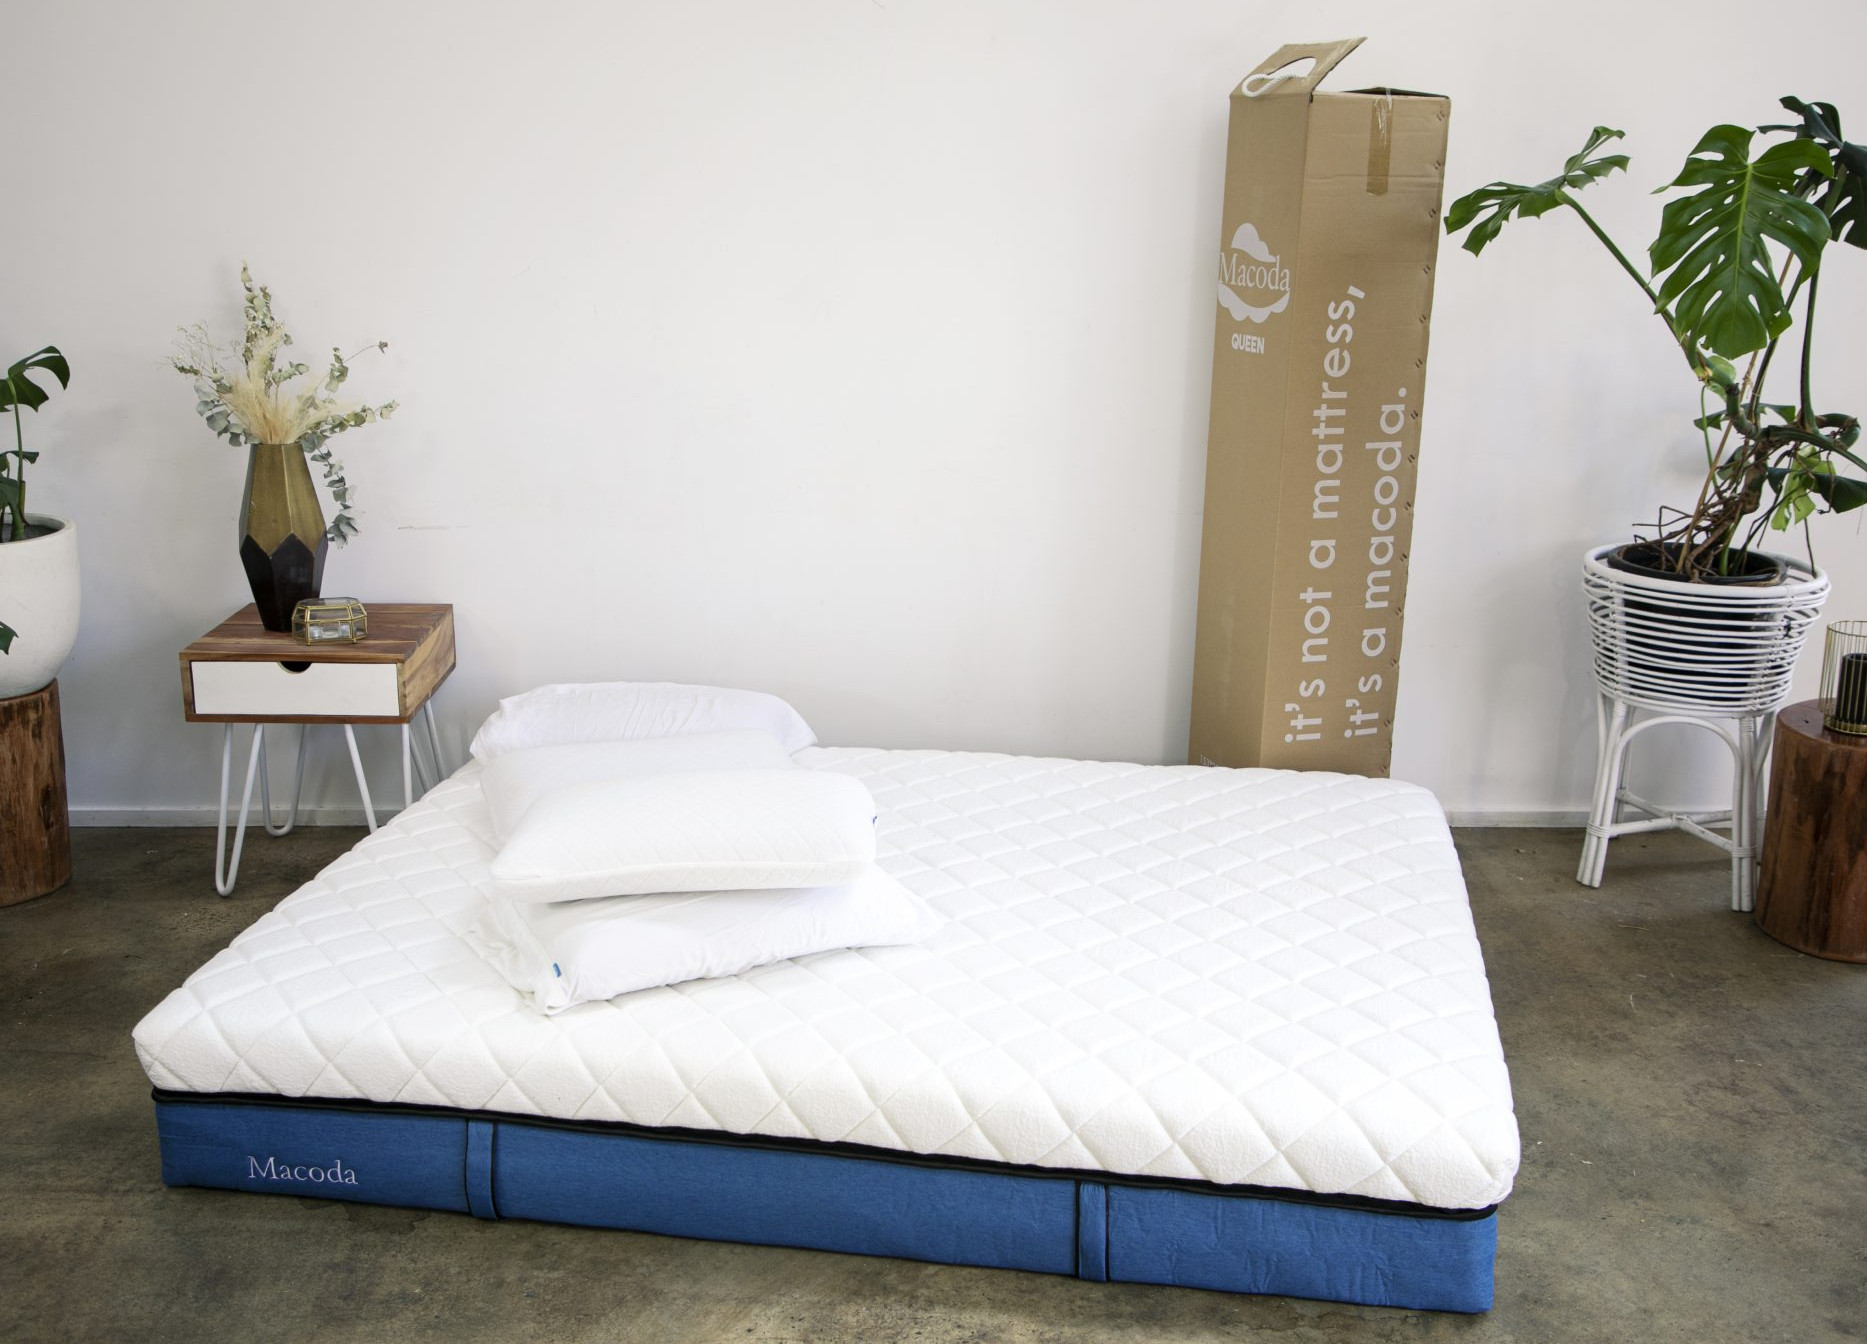 Non-toxic and eco-friendly mattresses